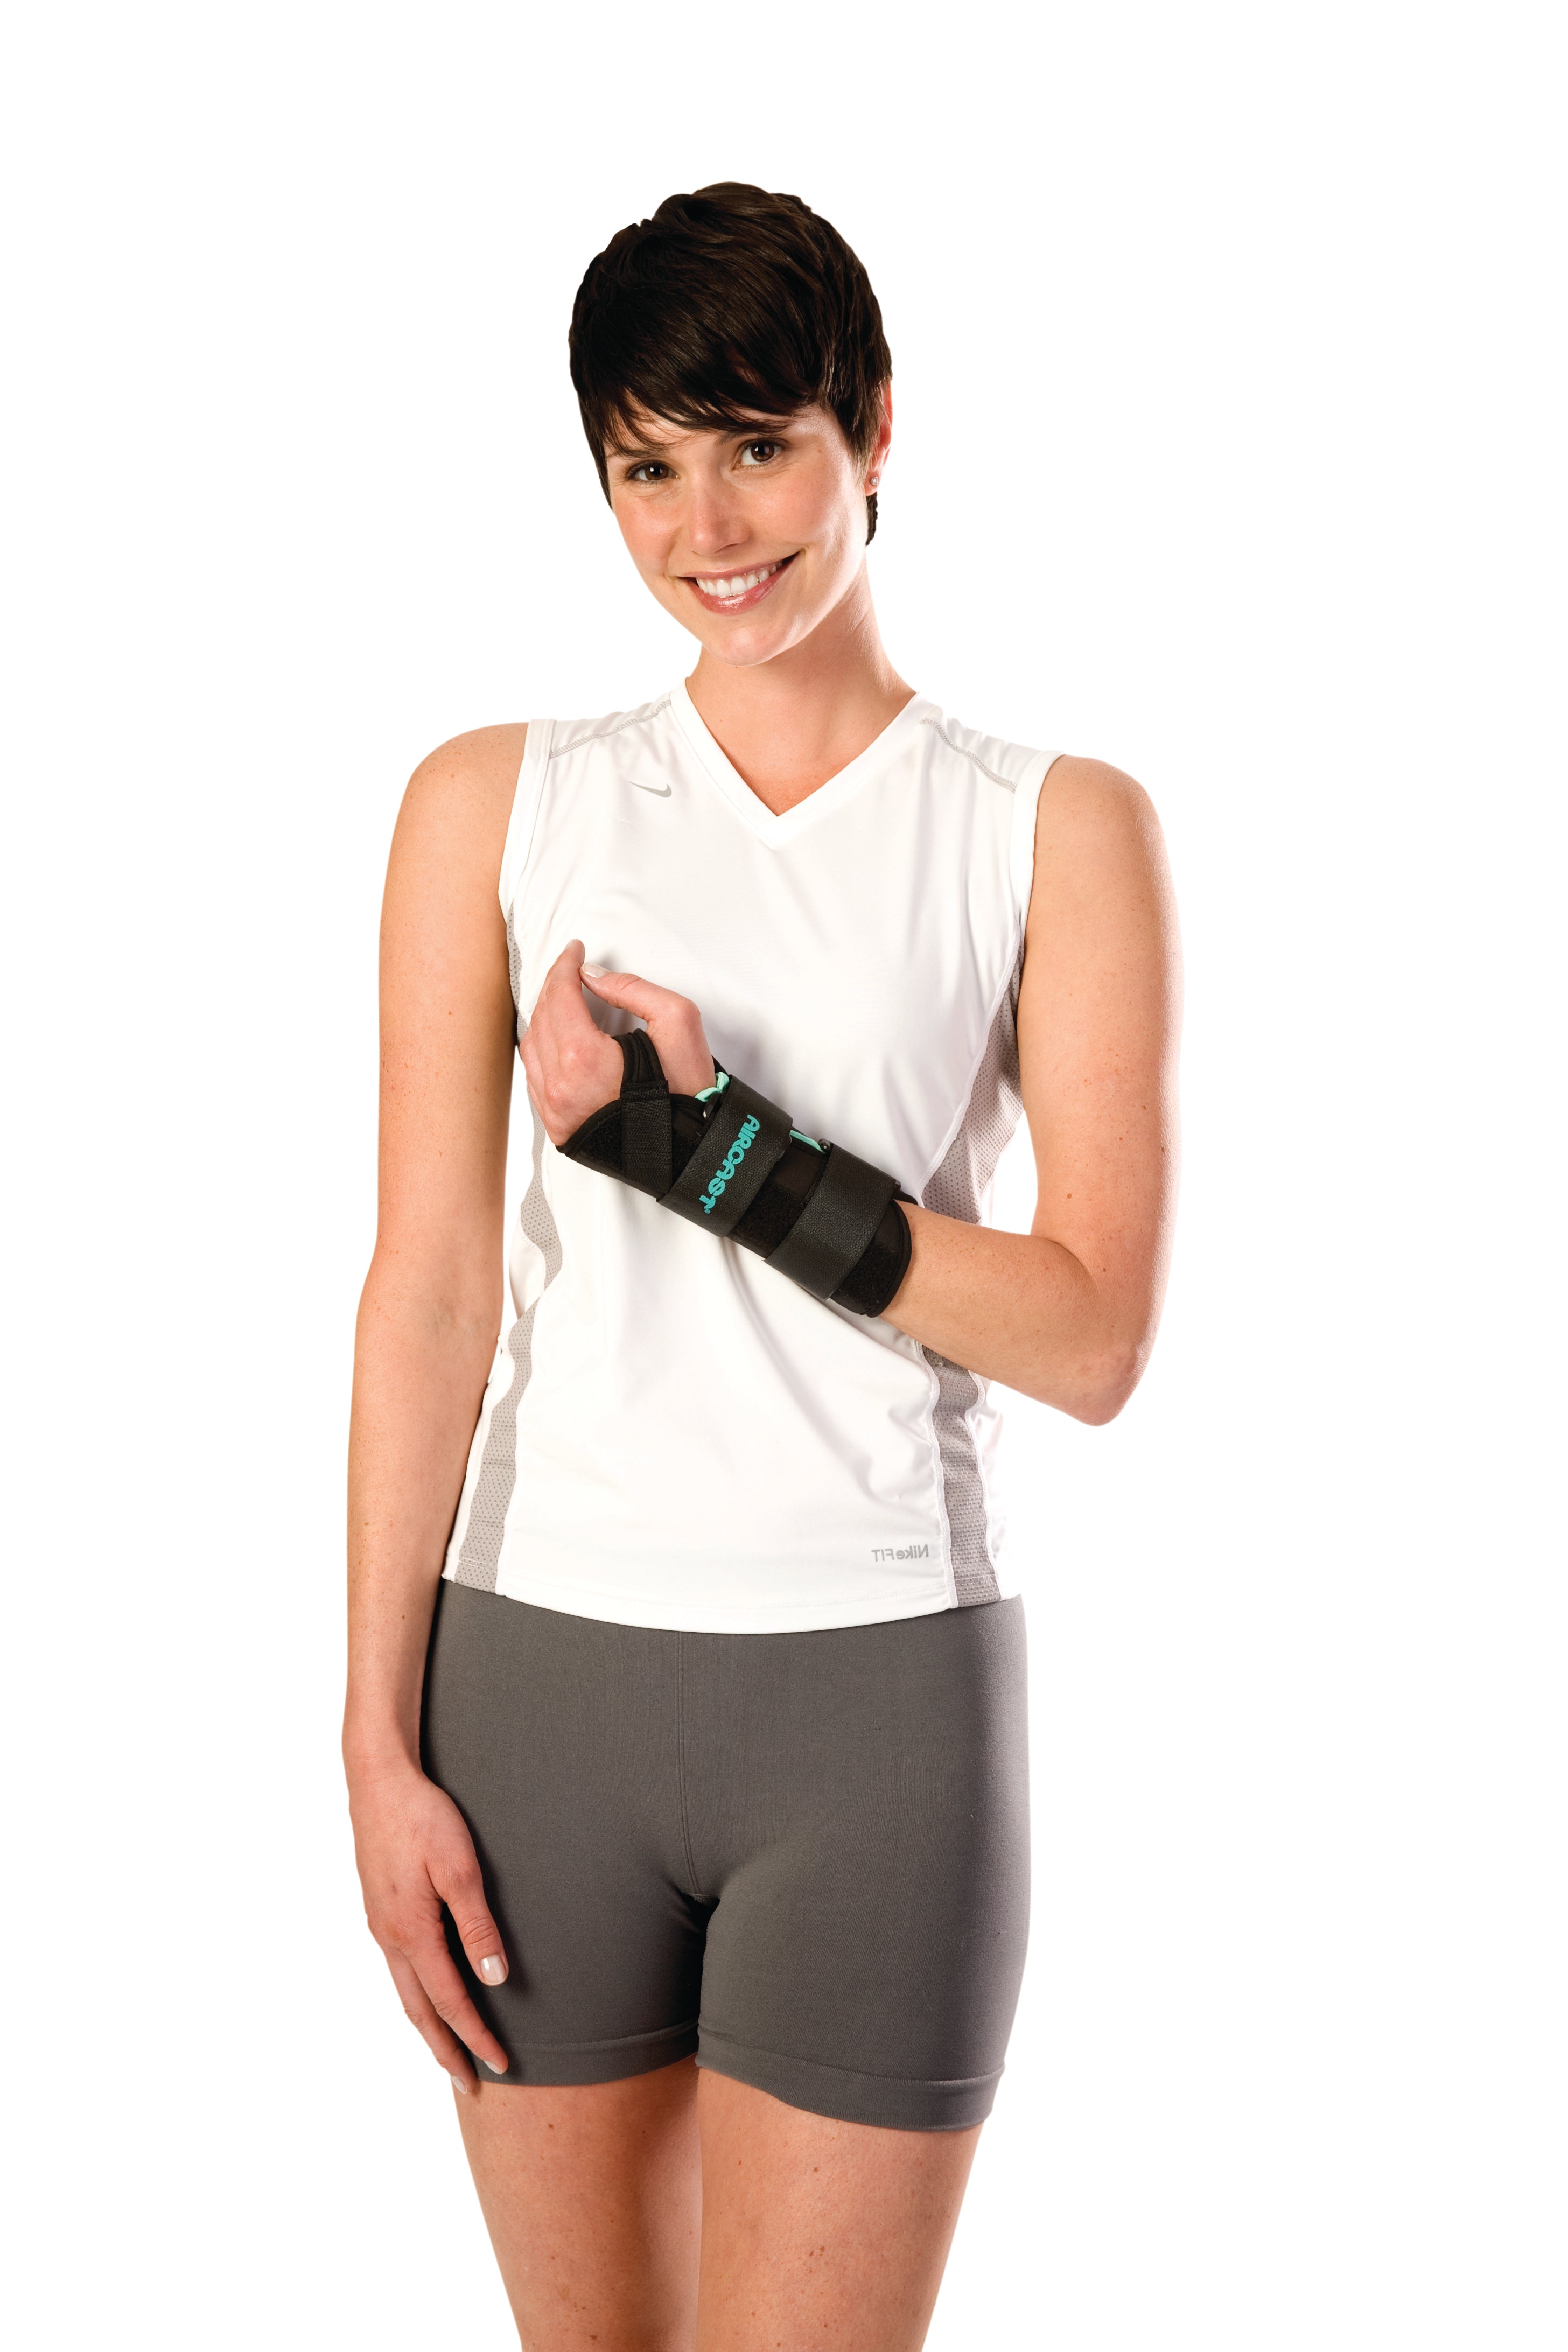 Wrist Brace with Thumb Spica AirCast® A2™ Aluminum / Foam / Nylon Left Hand Black Small